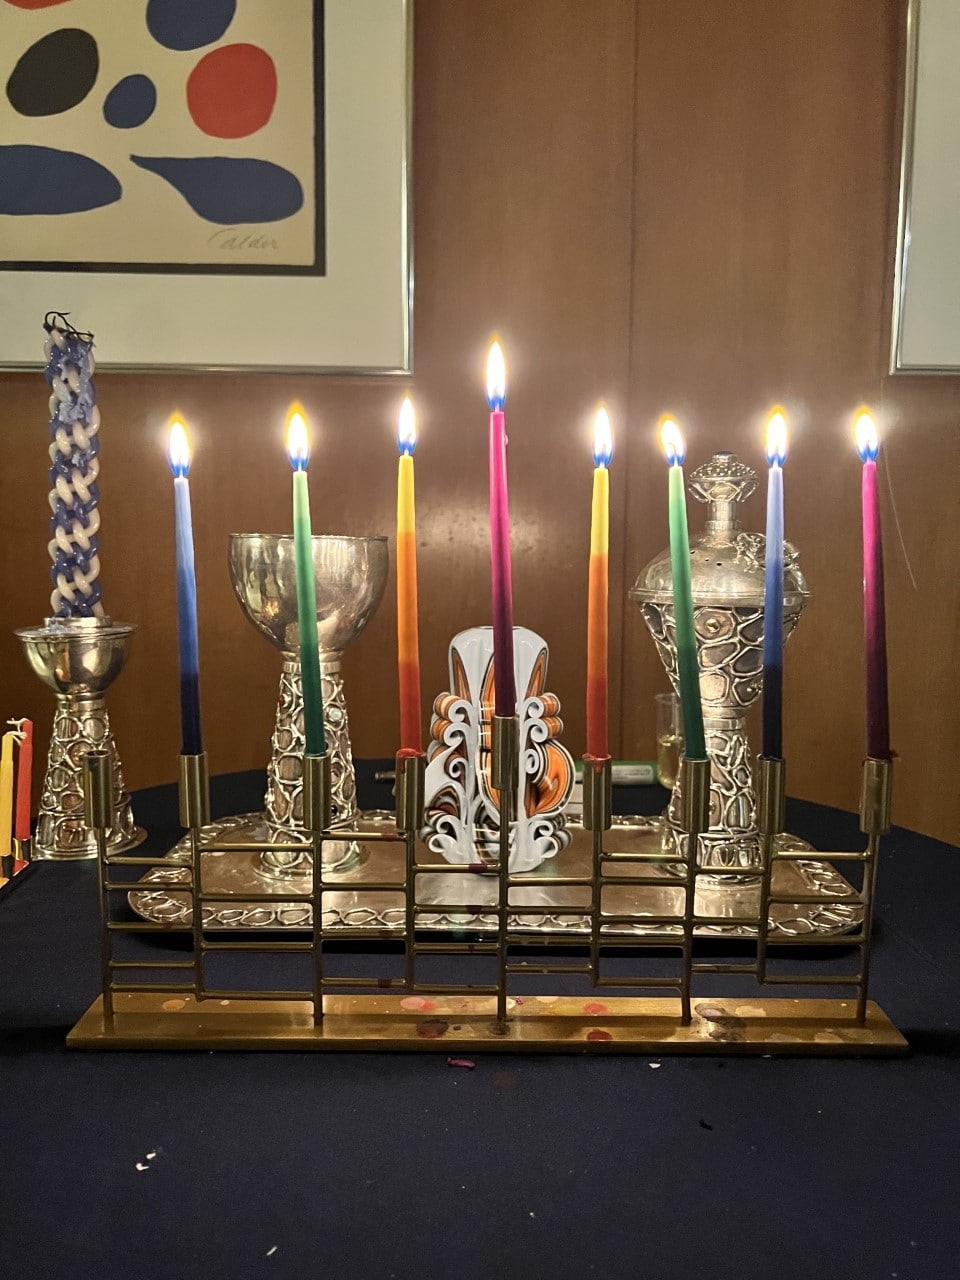 Hanukkah menorah with candles in rainbow colors